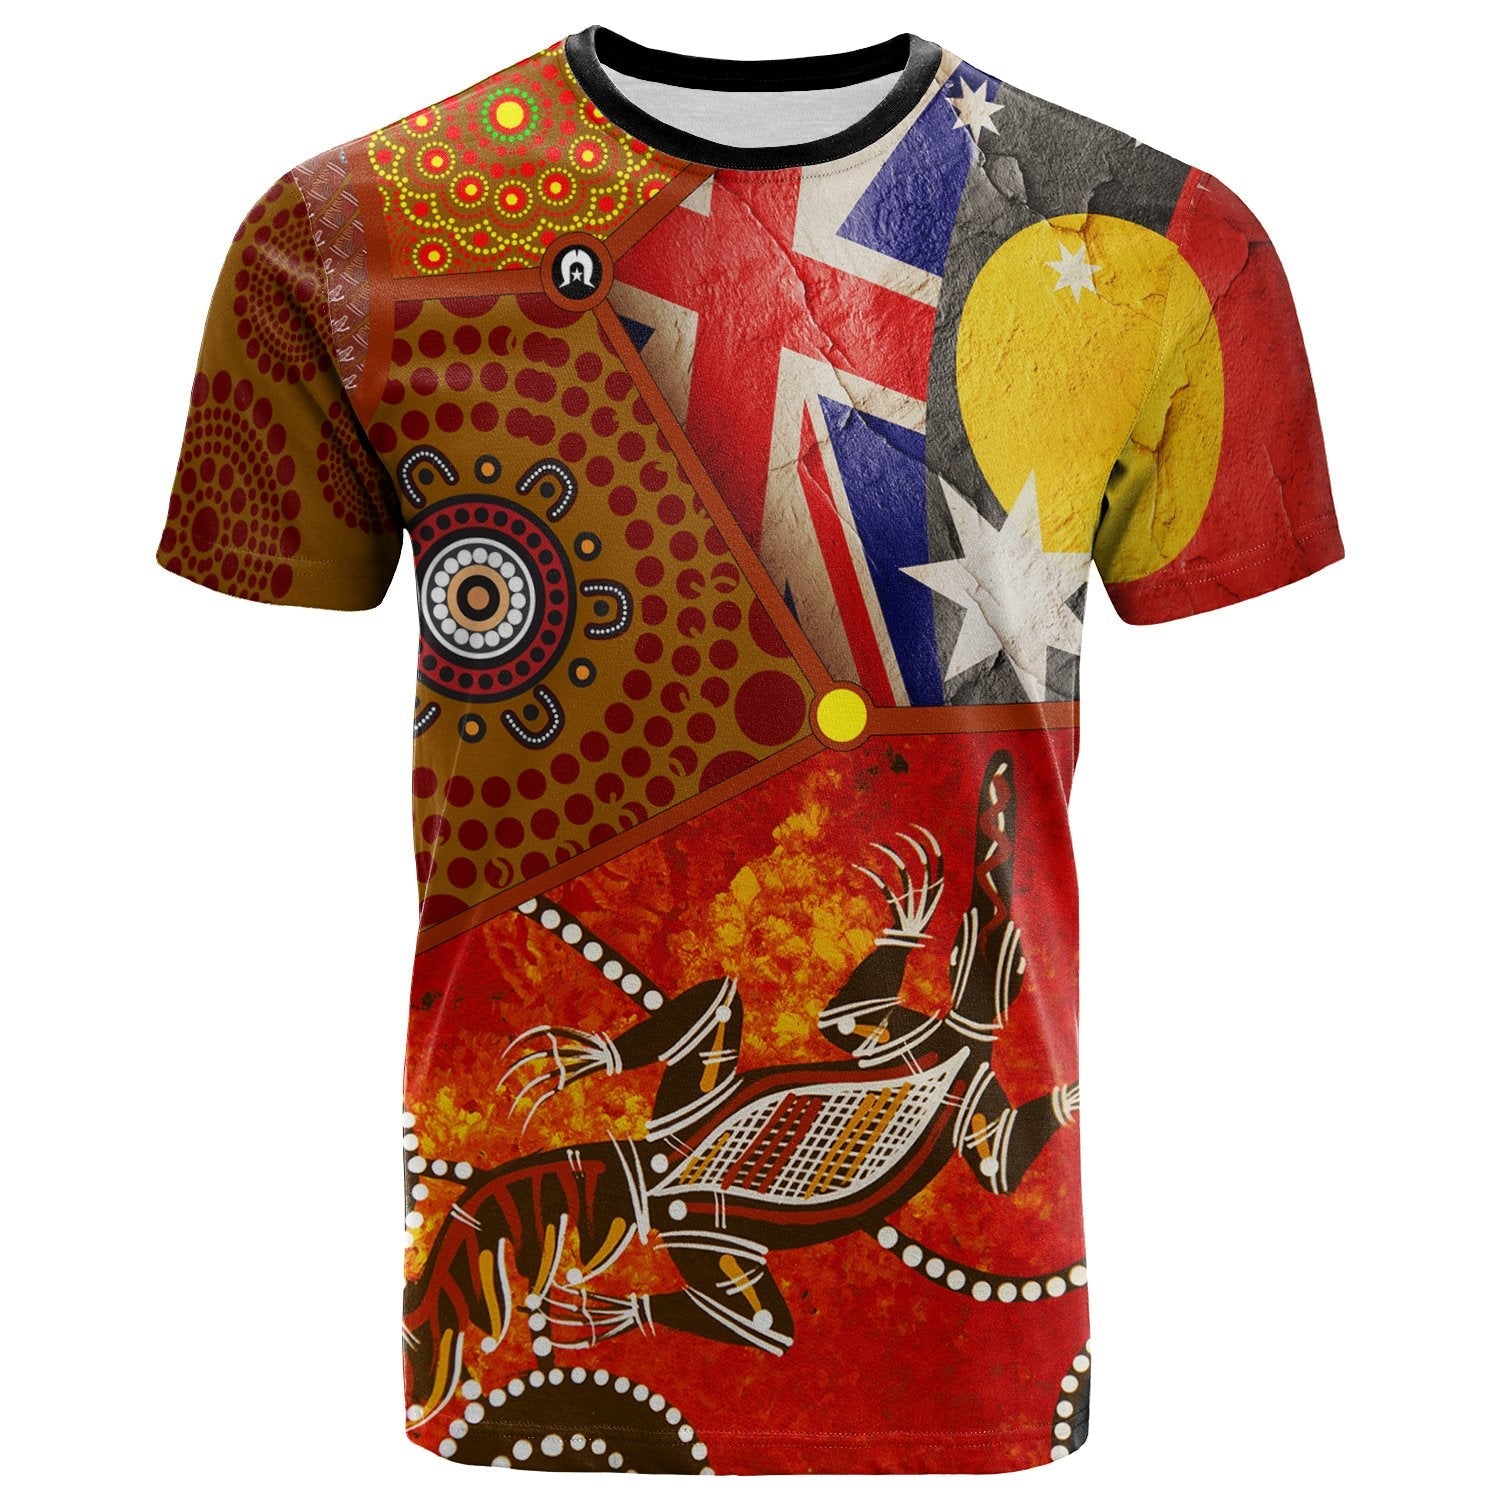 aboriginal-t-shirt-aboriginal-dot-patterns-flags-crocodile